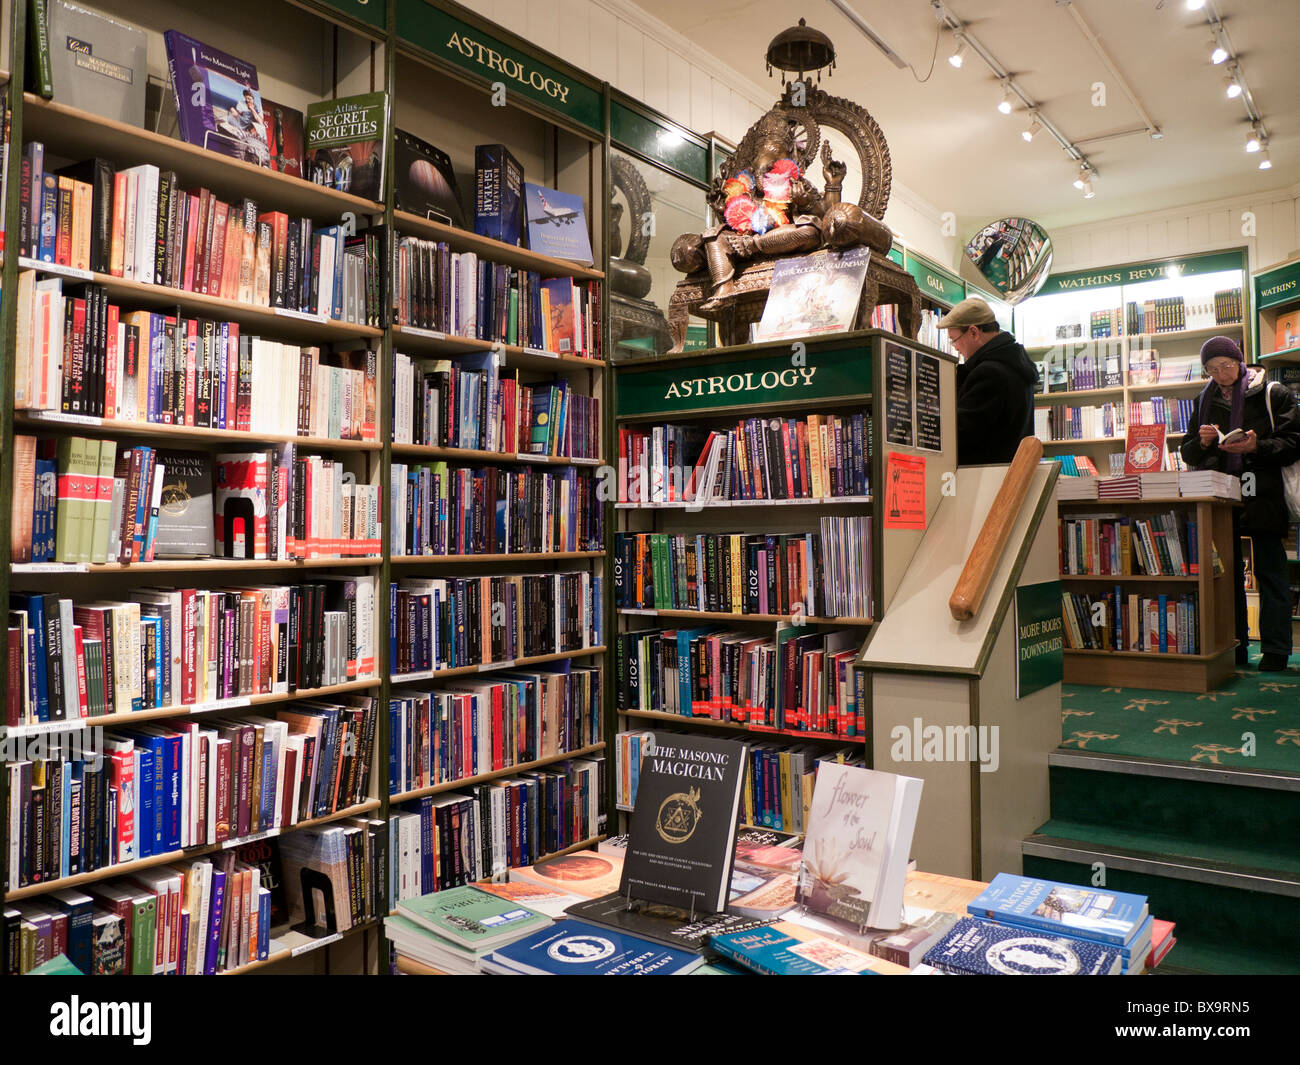 Inside Watkins bookshop in Cecil Court in London Britain Stock Photo